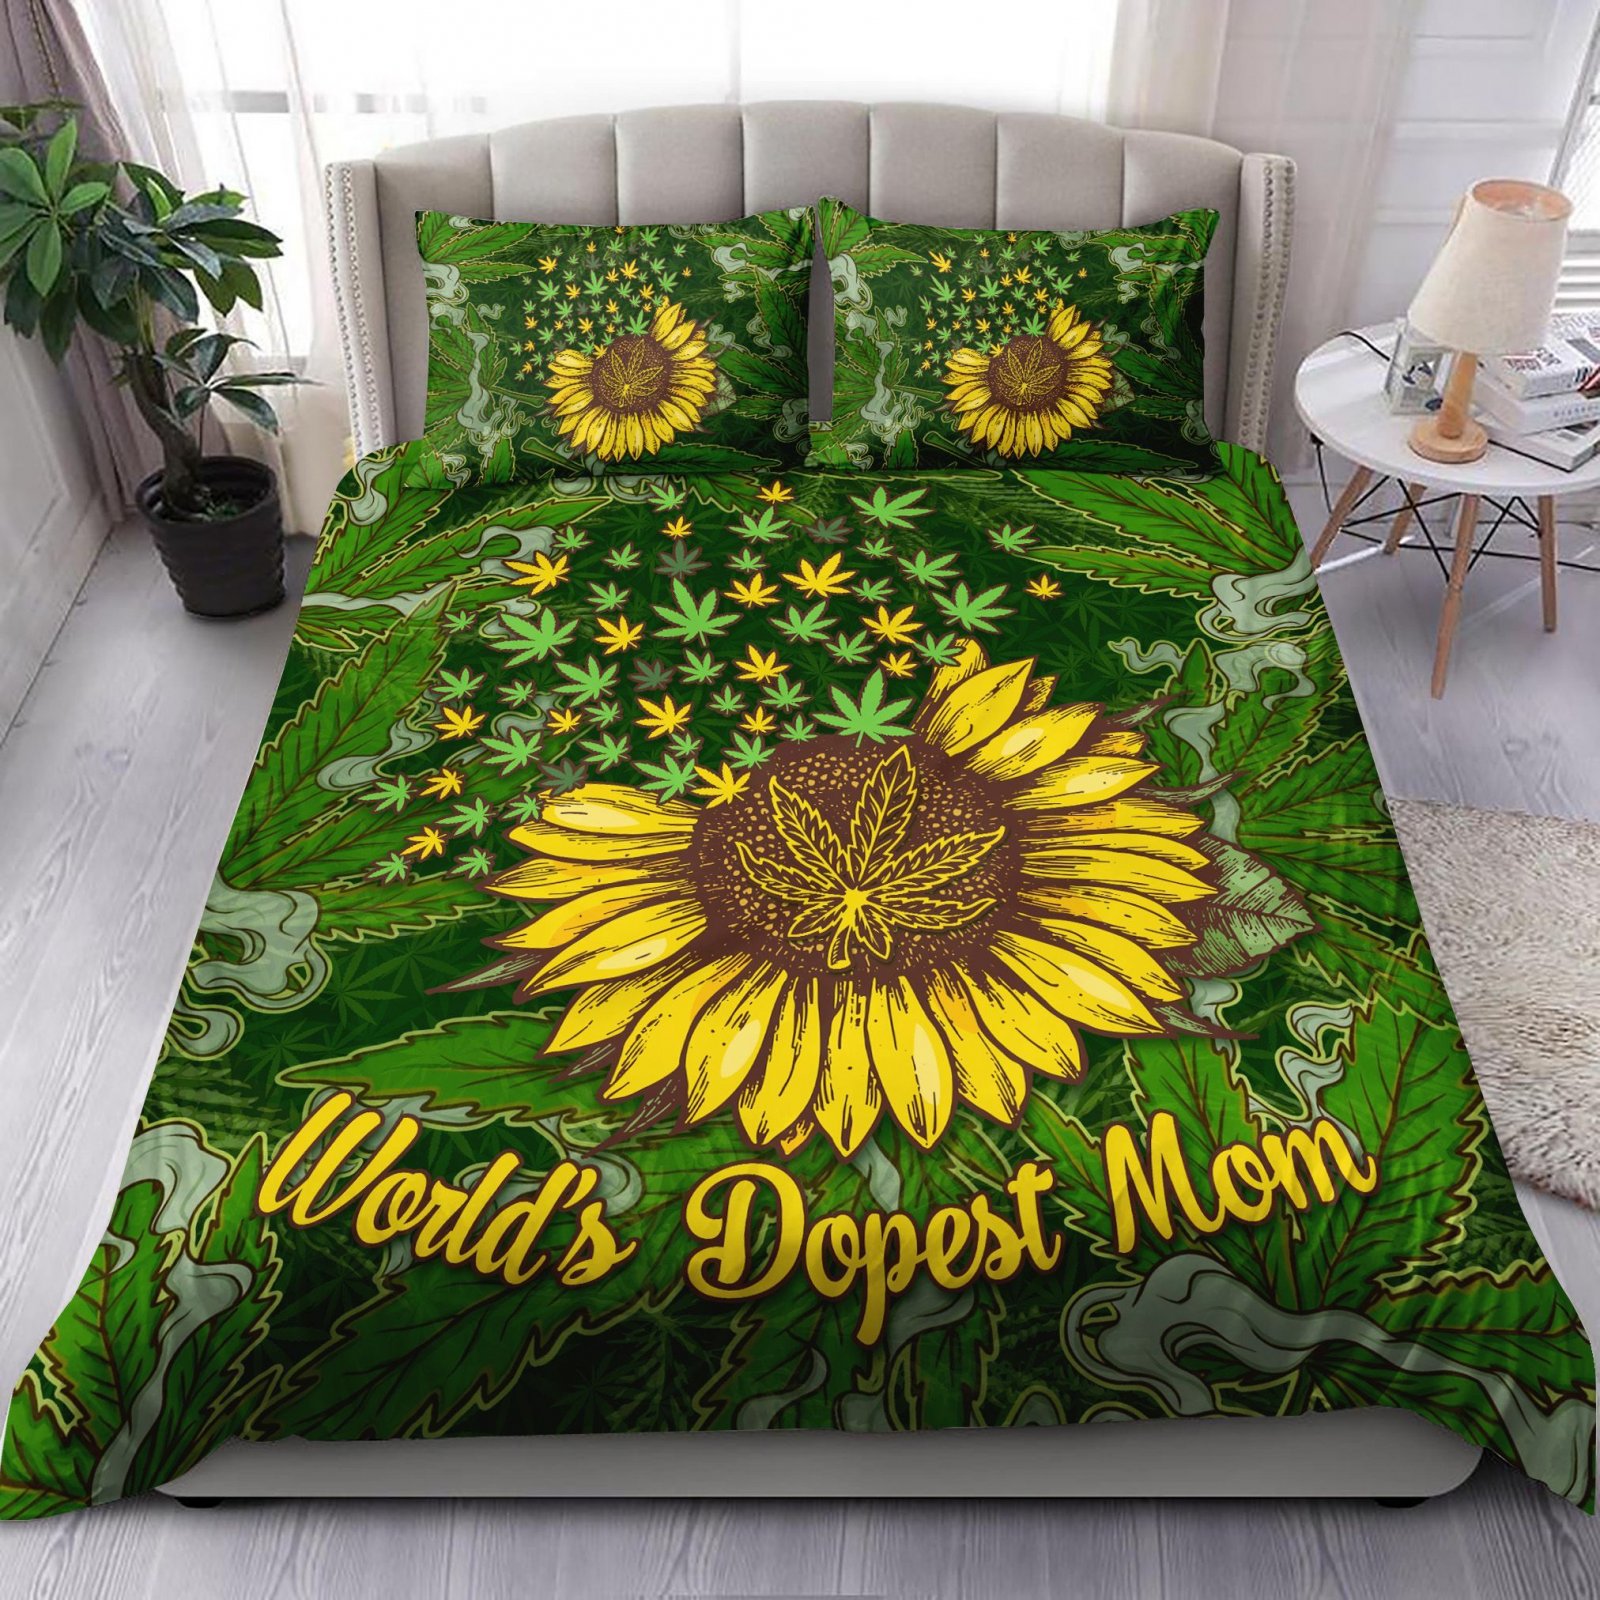 weed-sunflower-worlds-dopest-mom-kl1909007hn-bedding-set-0.jpeg